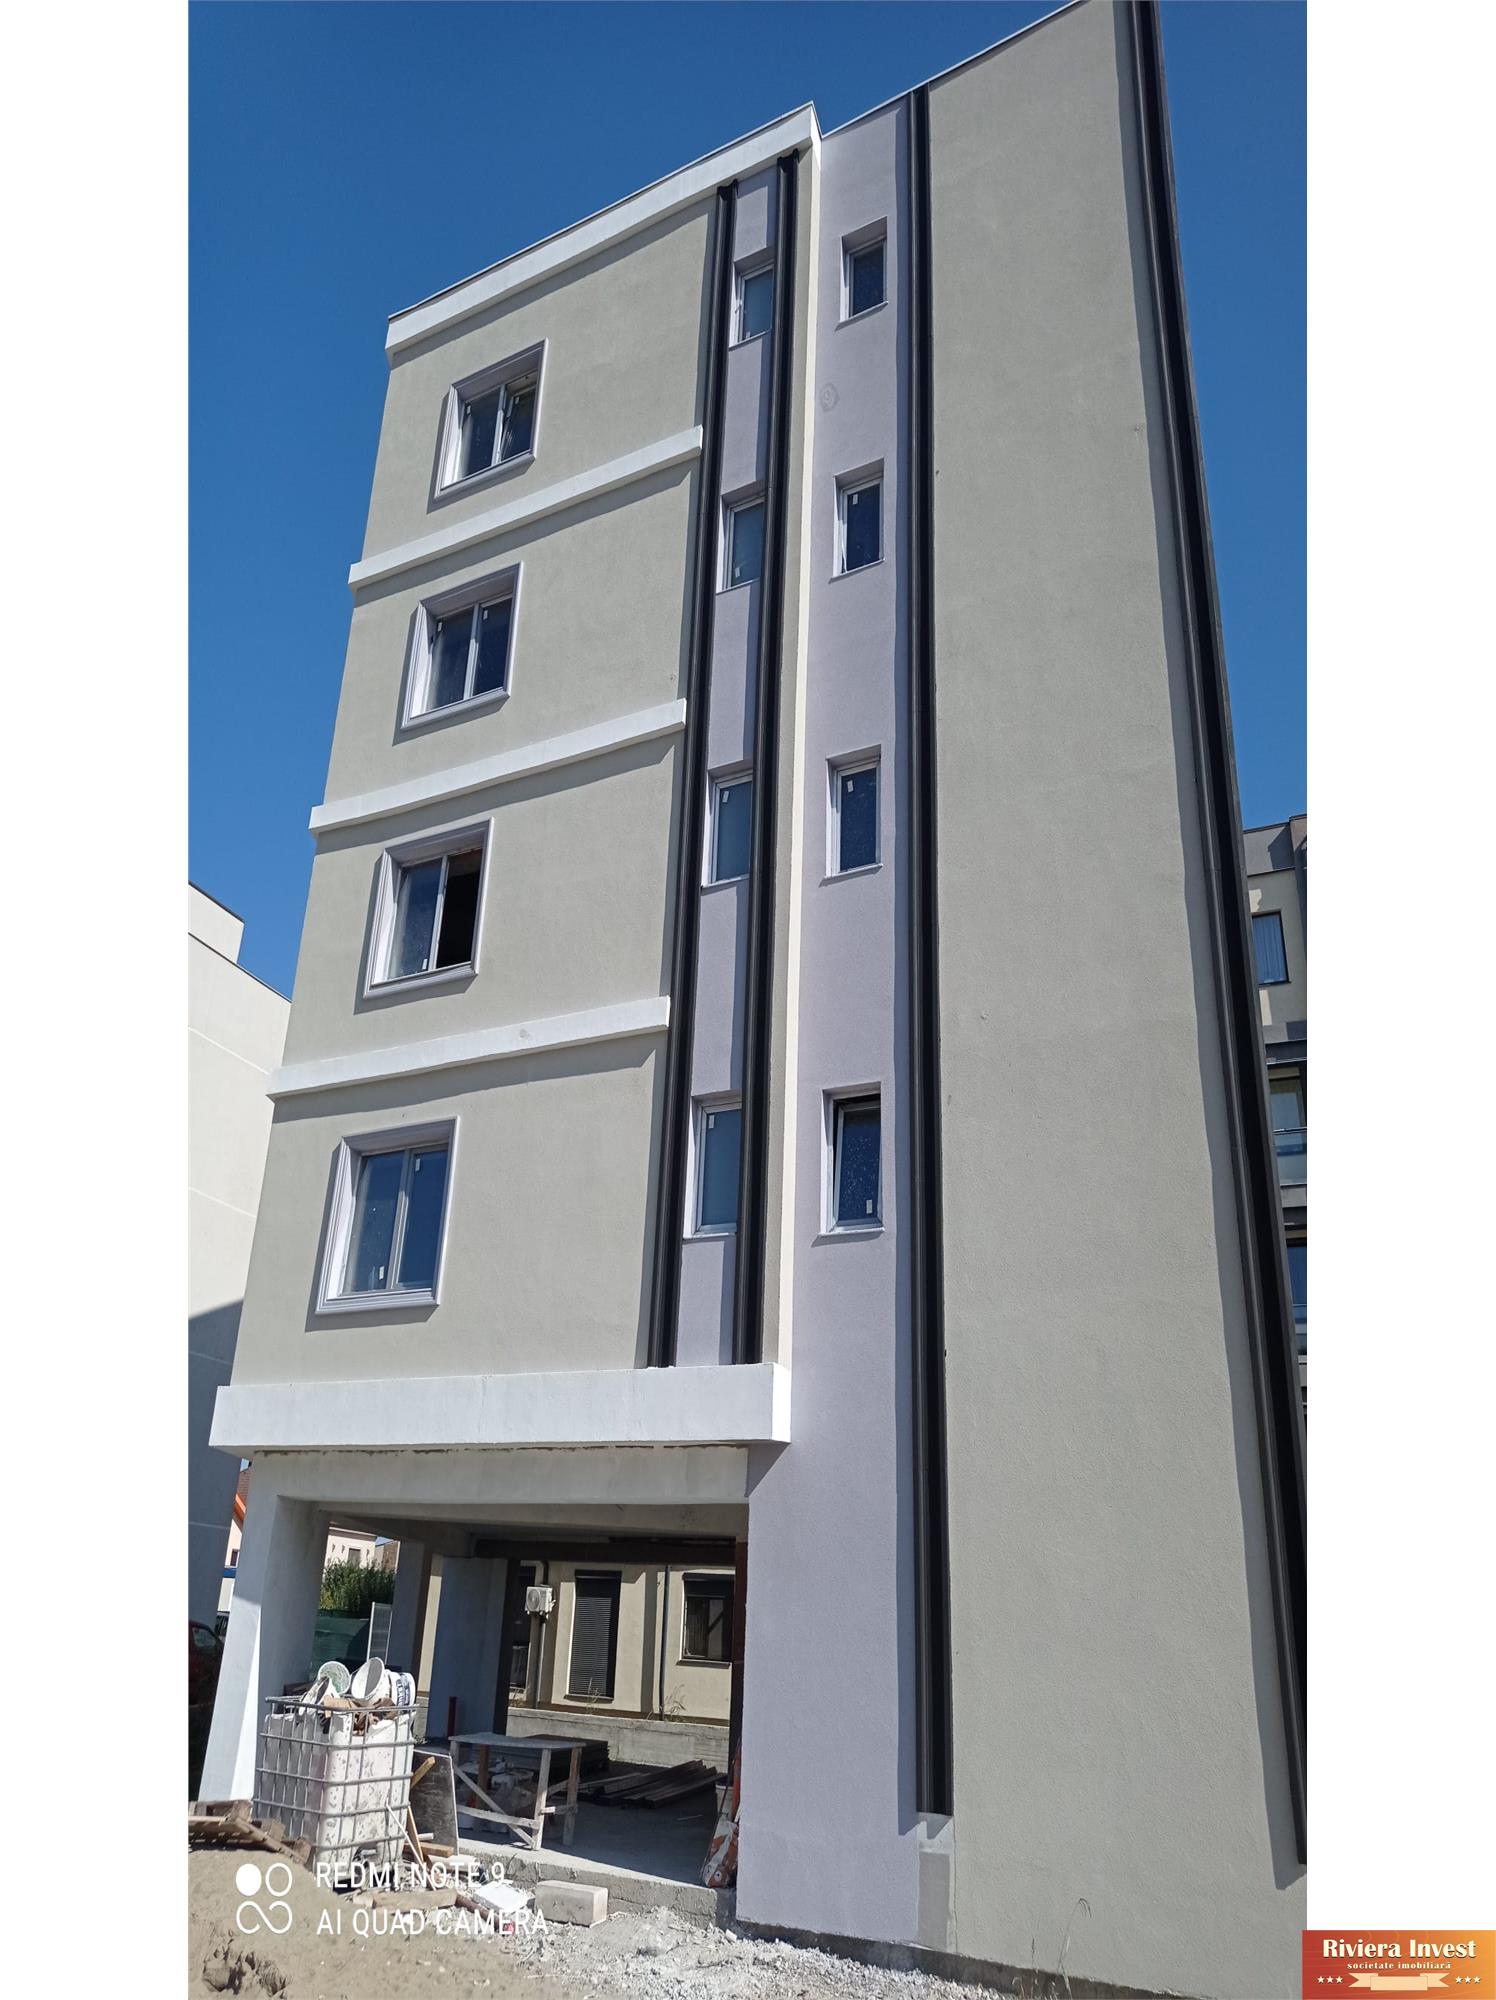 Palazu Mare Elvila Bd. Tomis Bloc nou 2022 cu 4 apartamente de 3 camere